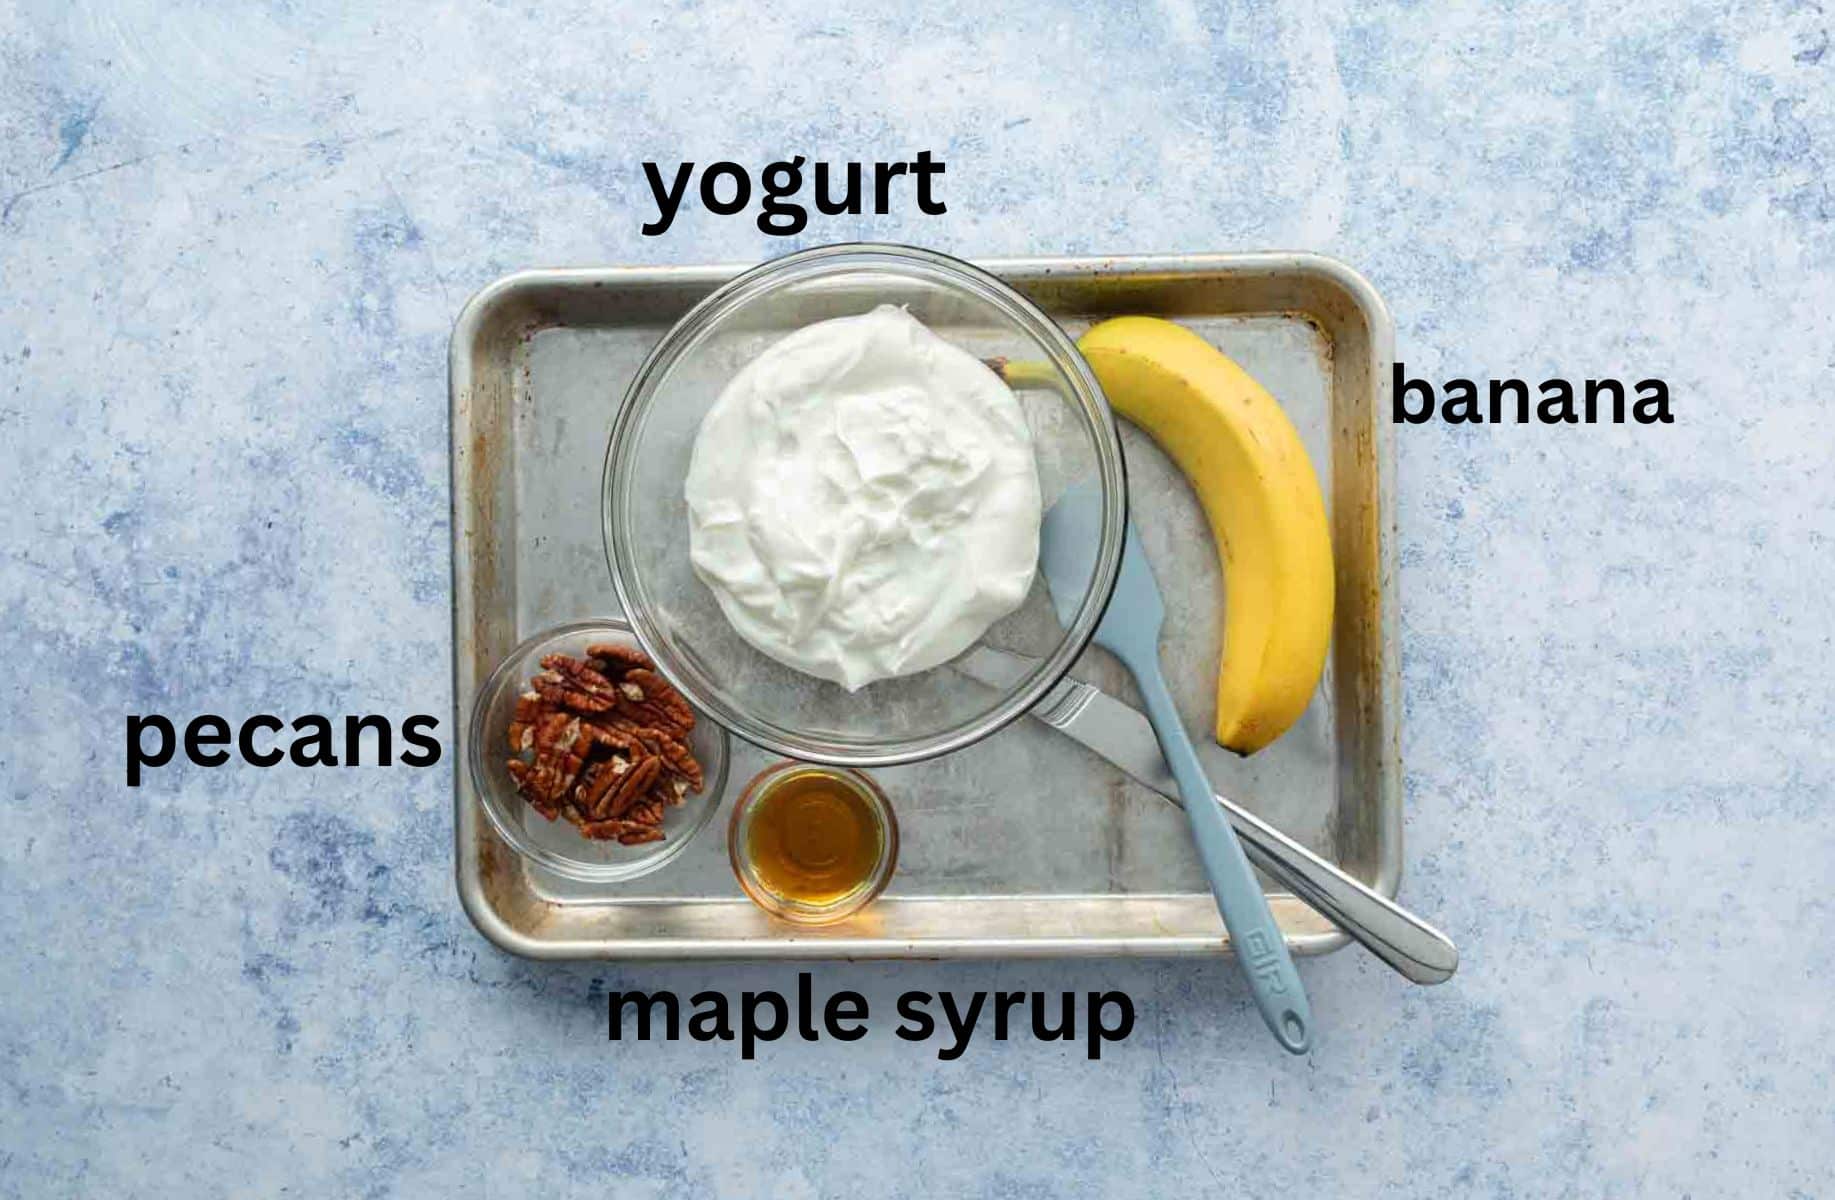 yogurt, banana, nuts, syrup on baking sheet with labels